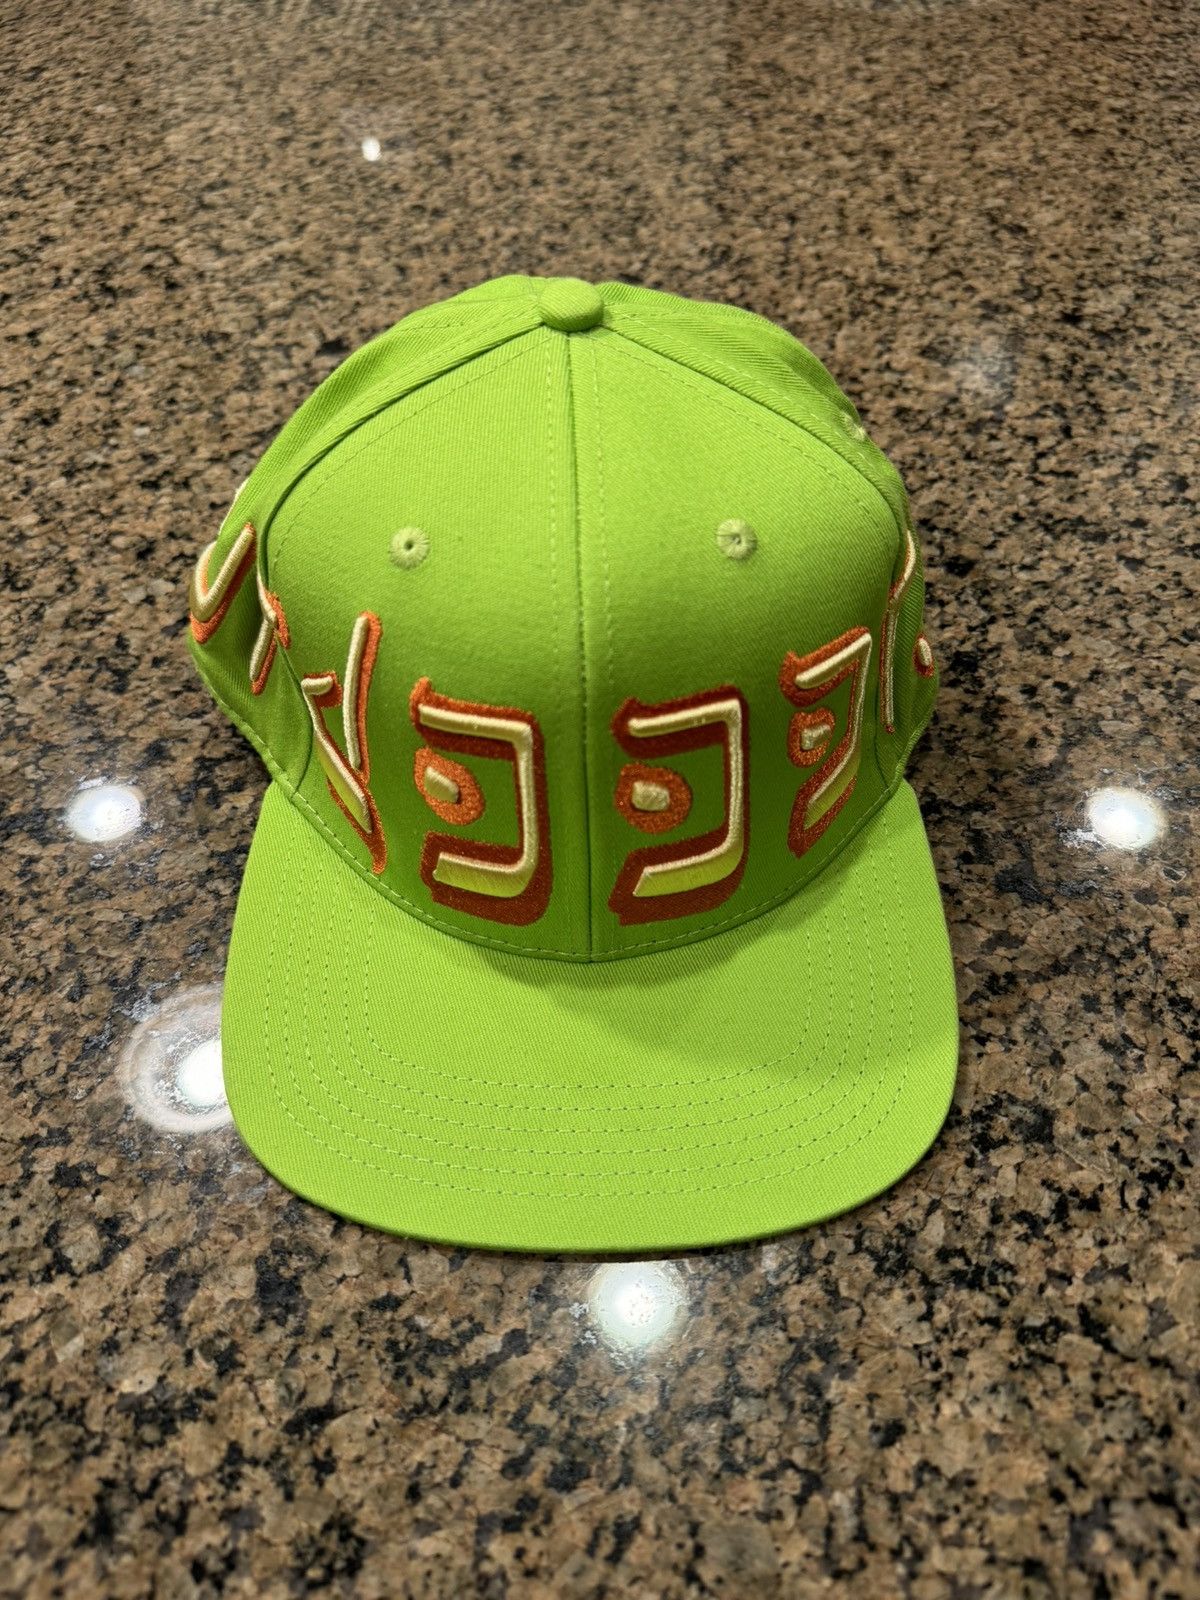 murd333r.fm Murd333r.Fm Fitted Hat Cap Size 7 | Grailed